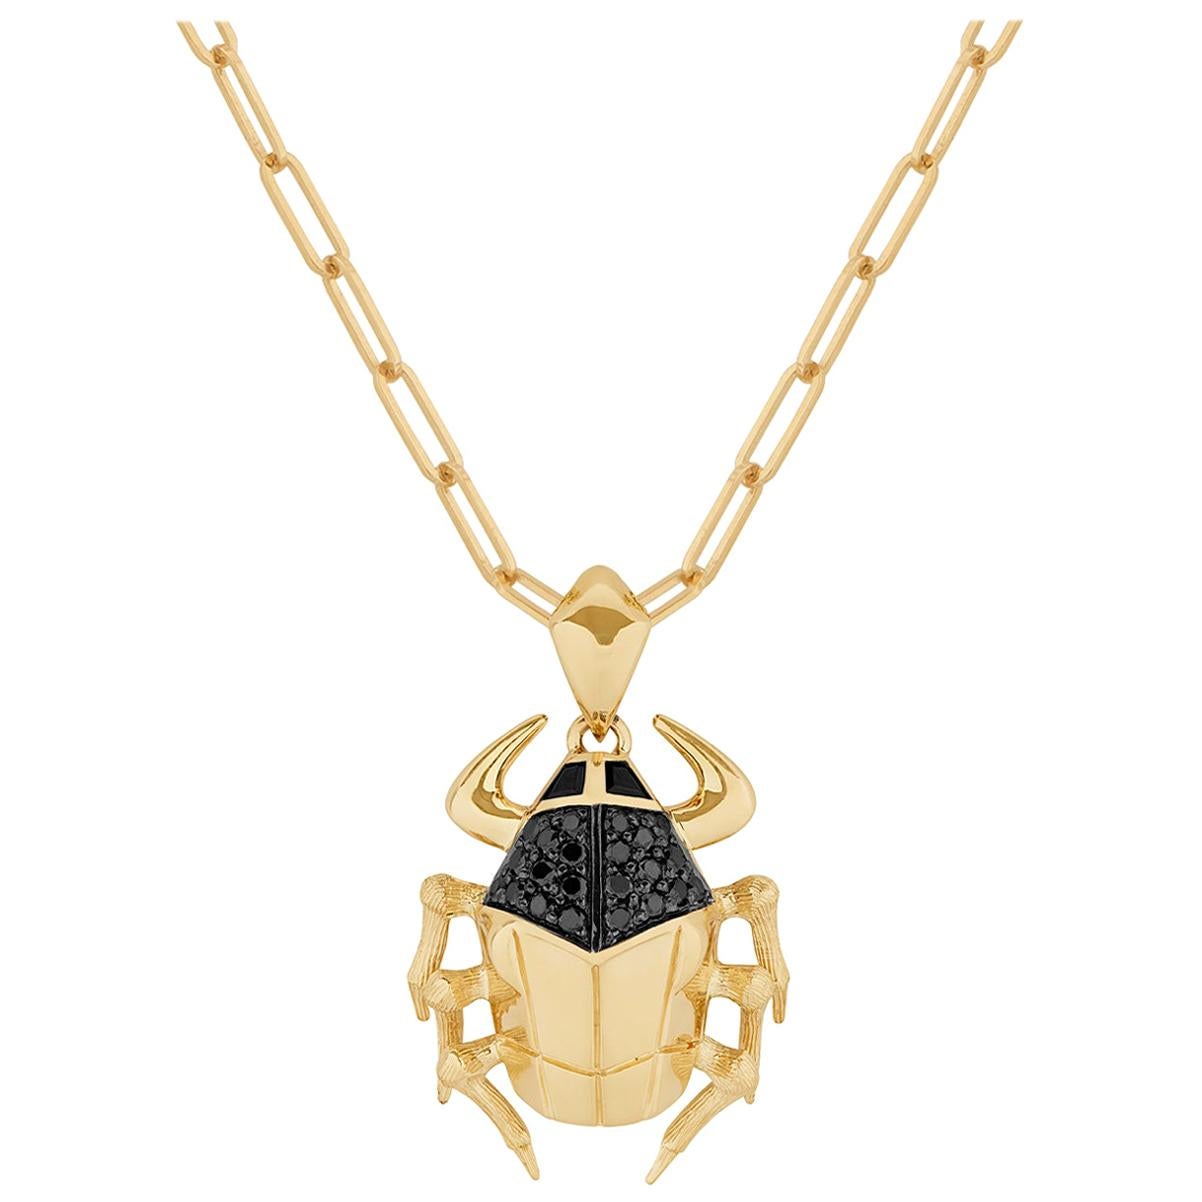 Stephen Webster Jitterbug Toro Beetle 18 Carat Gold and Black Diamond Pendant For Sale